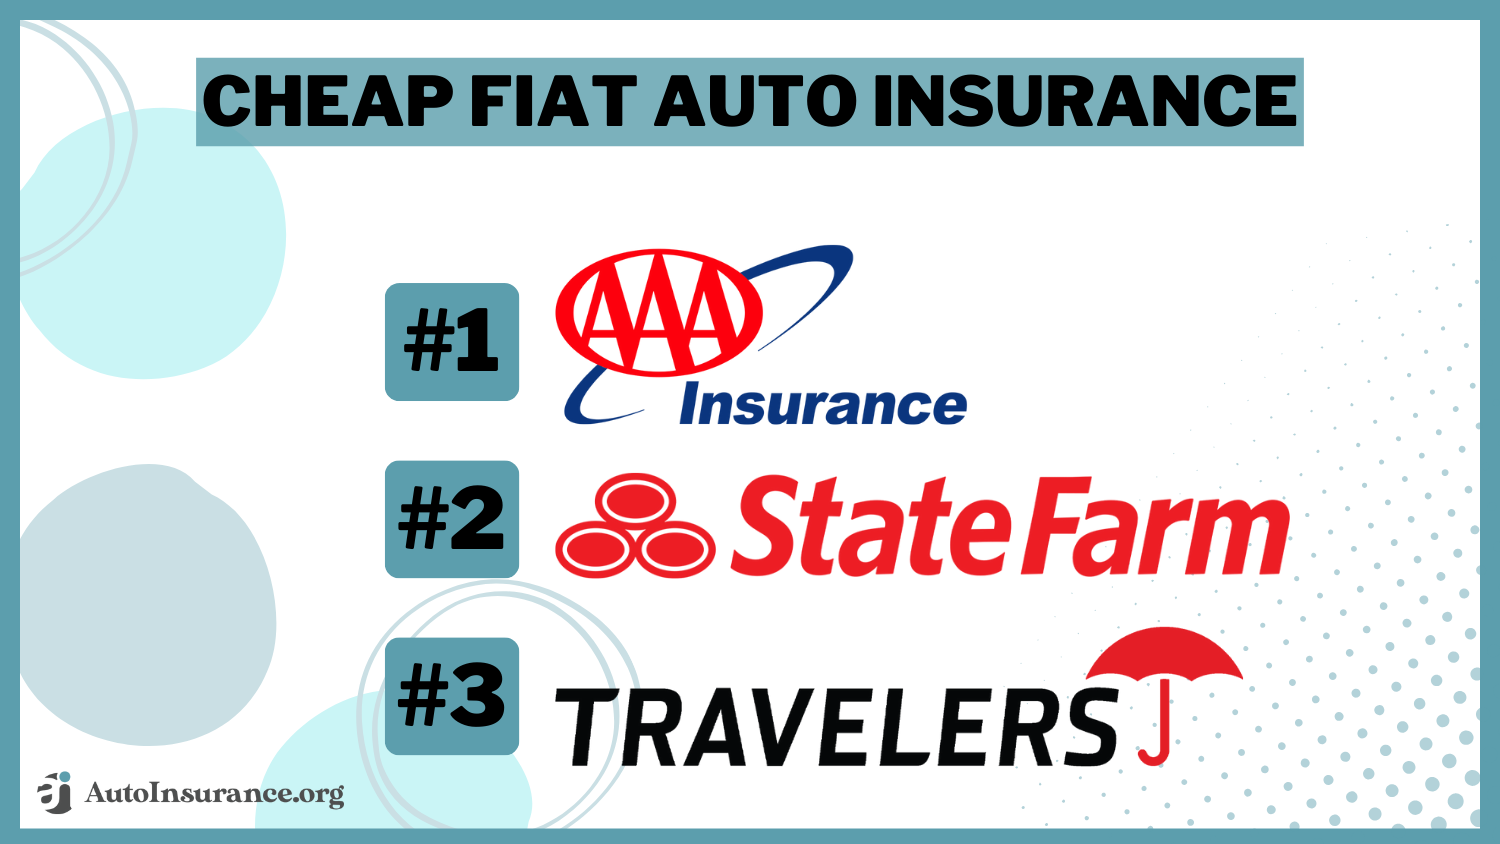 Cheap Fiat Auto Insurance: AAA, State Farm, Travelers